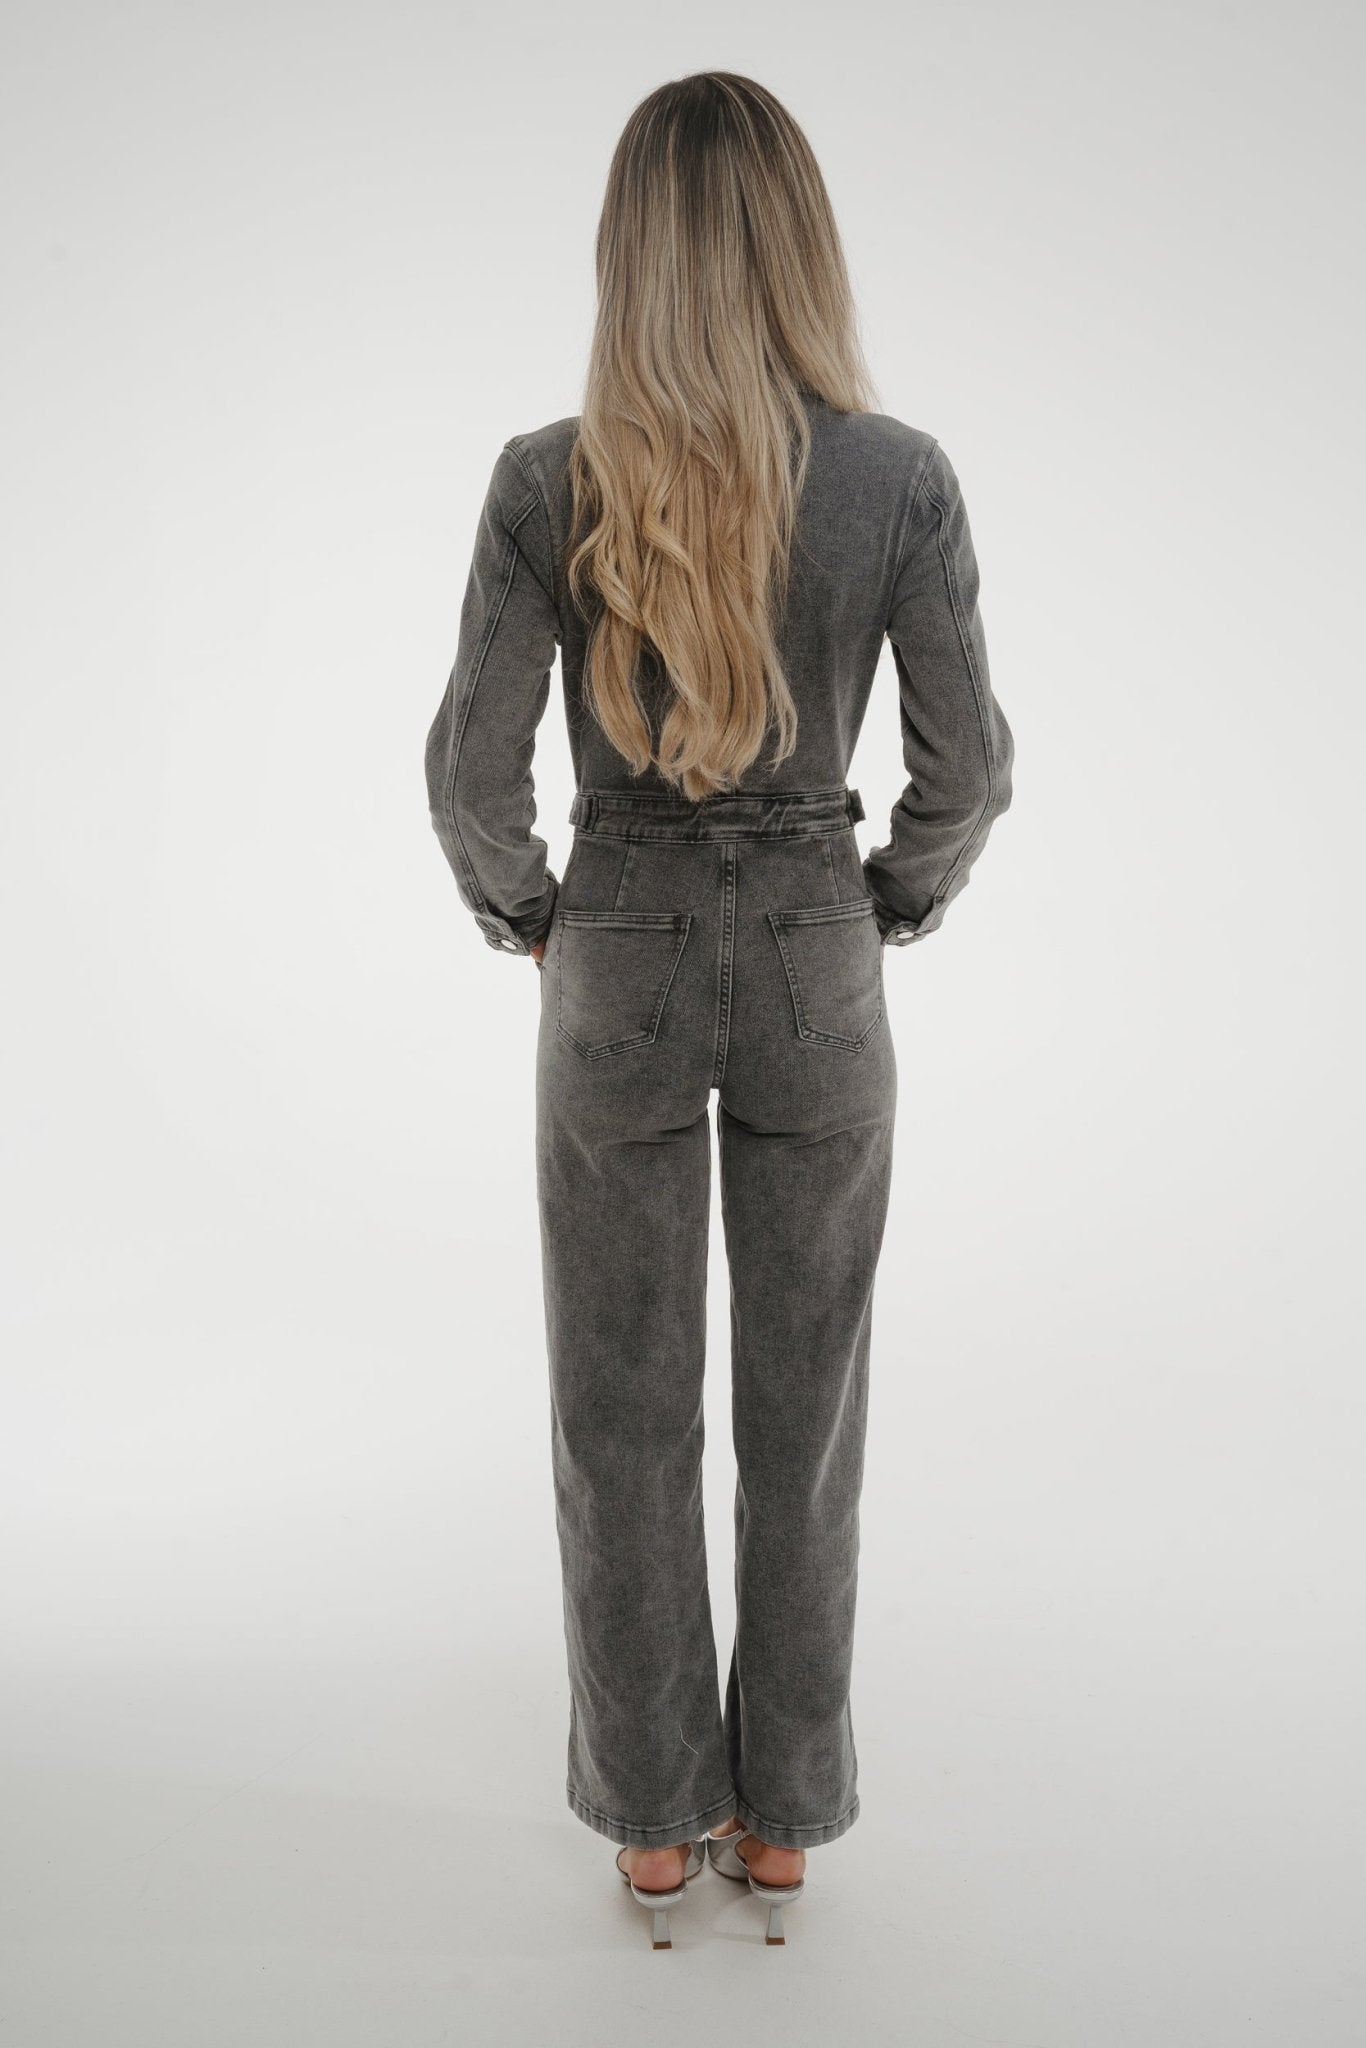 Freya Zip Front Jumpsuit In Grey Wash - The Walk in Wardrobe